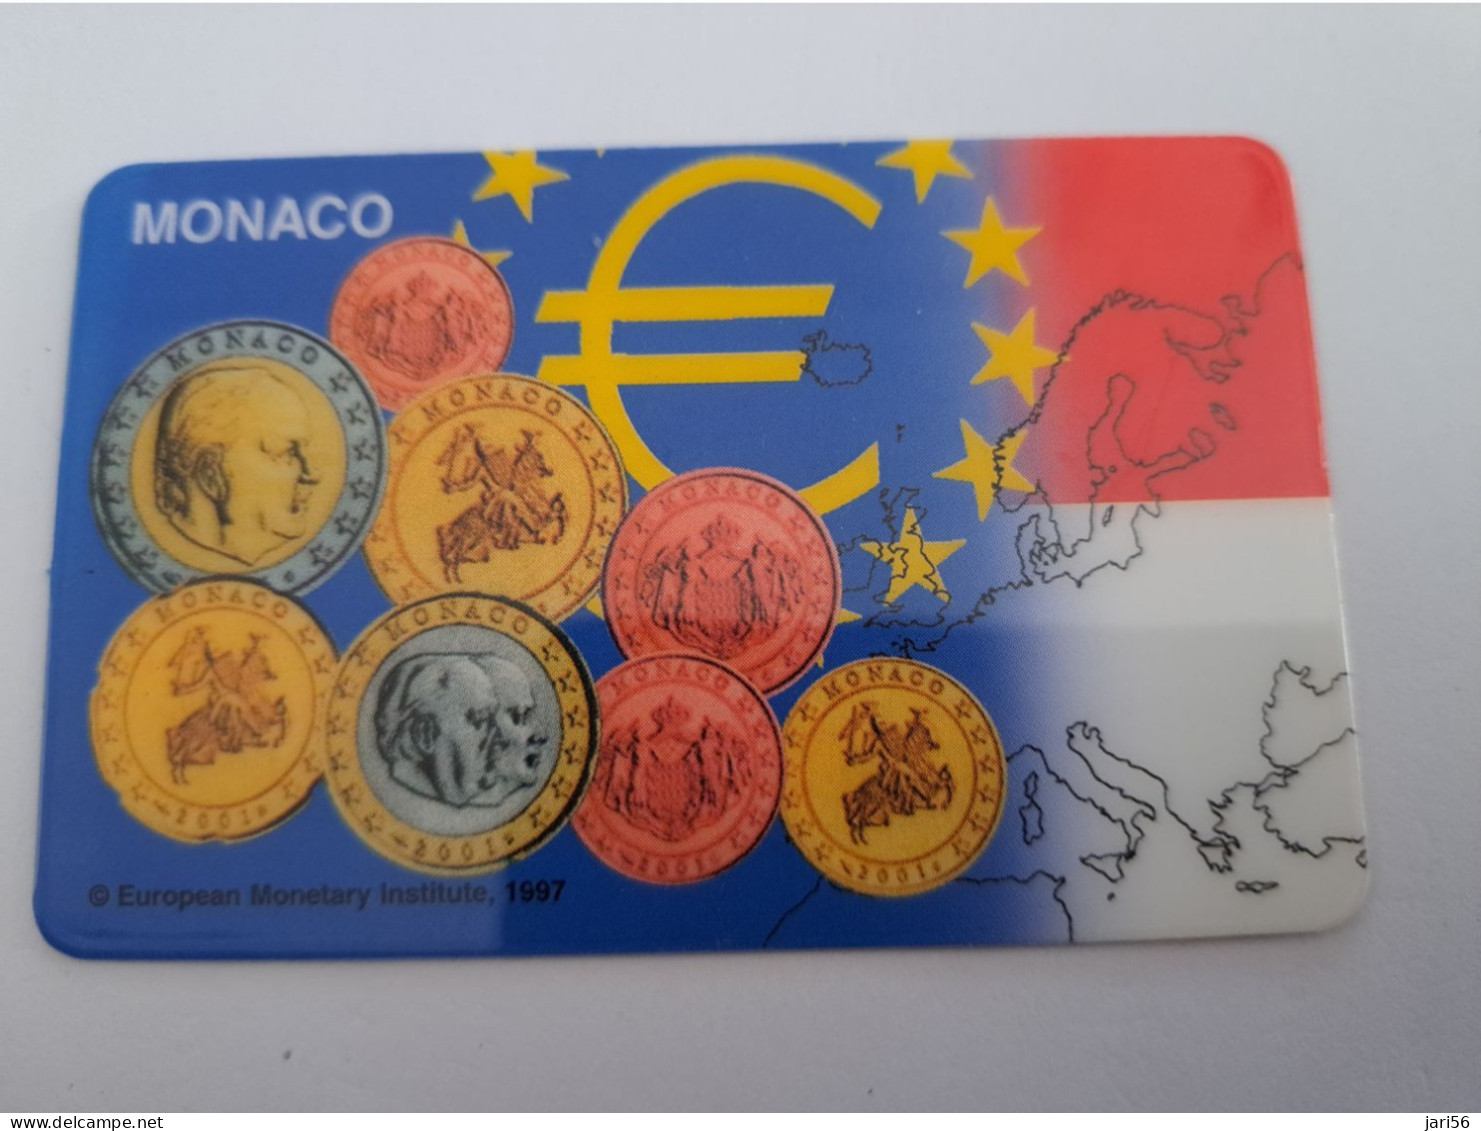 GREAT BRITAIN   20 UNITS   / EURO COINS/ MONACO       PHONECARD   (date 06/ 2002)  PREPAID CARD / MINT      **14829** - Verzamelingen